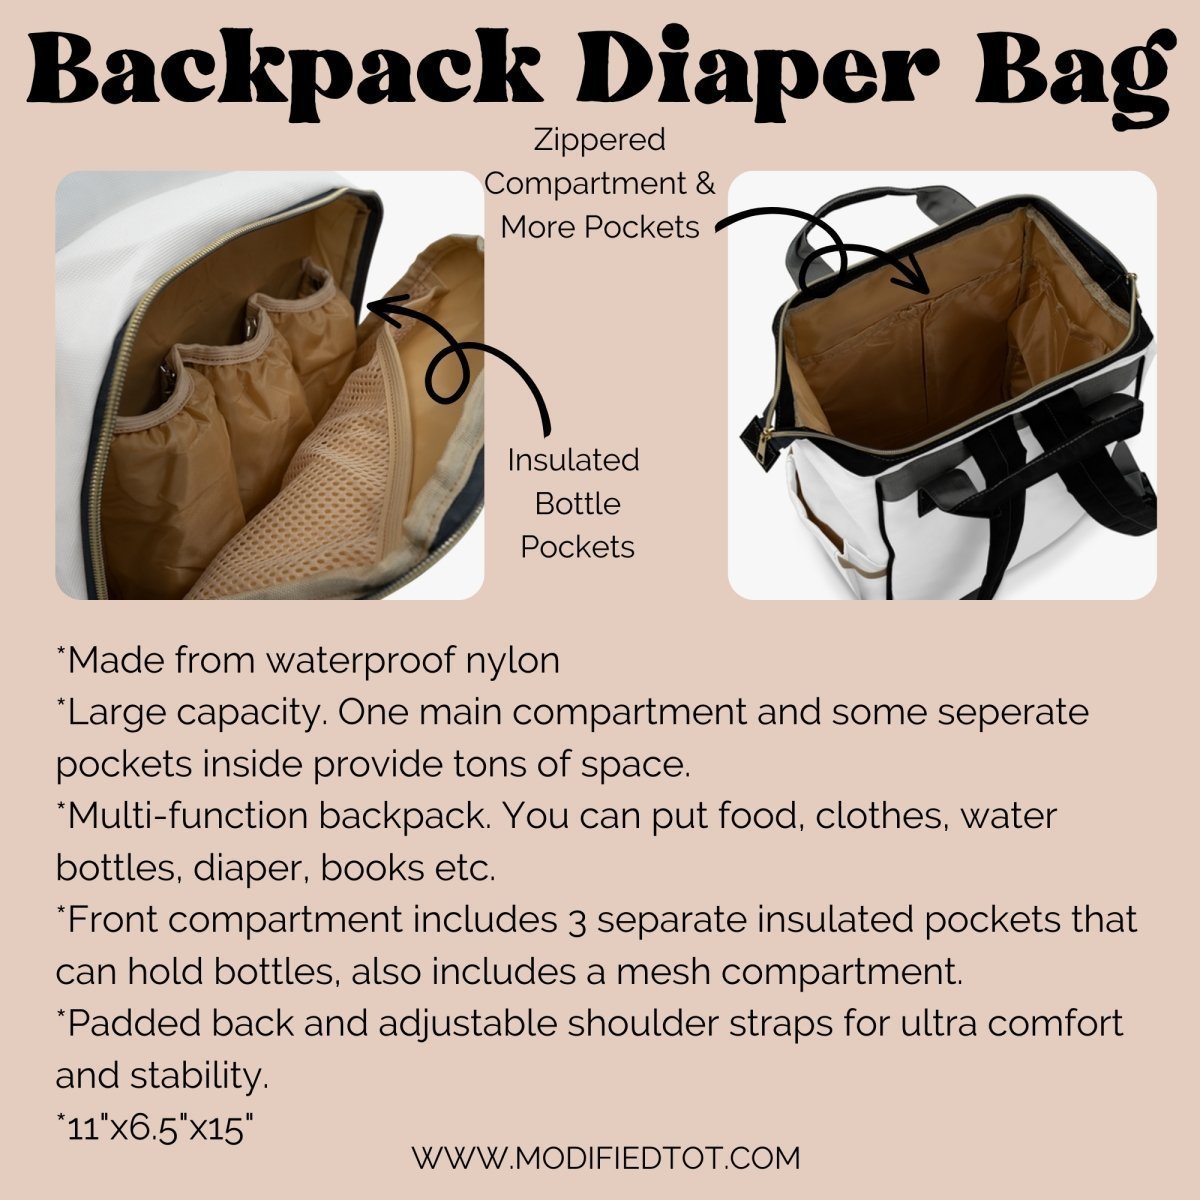 Lovely Lavender Personalized Backpack Diaper Bag - gender_girl, Lovely Lavender, text